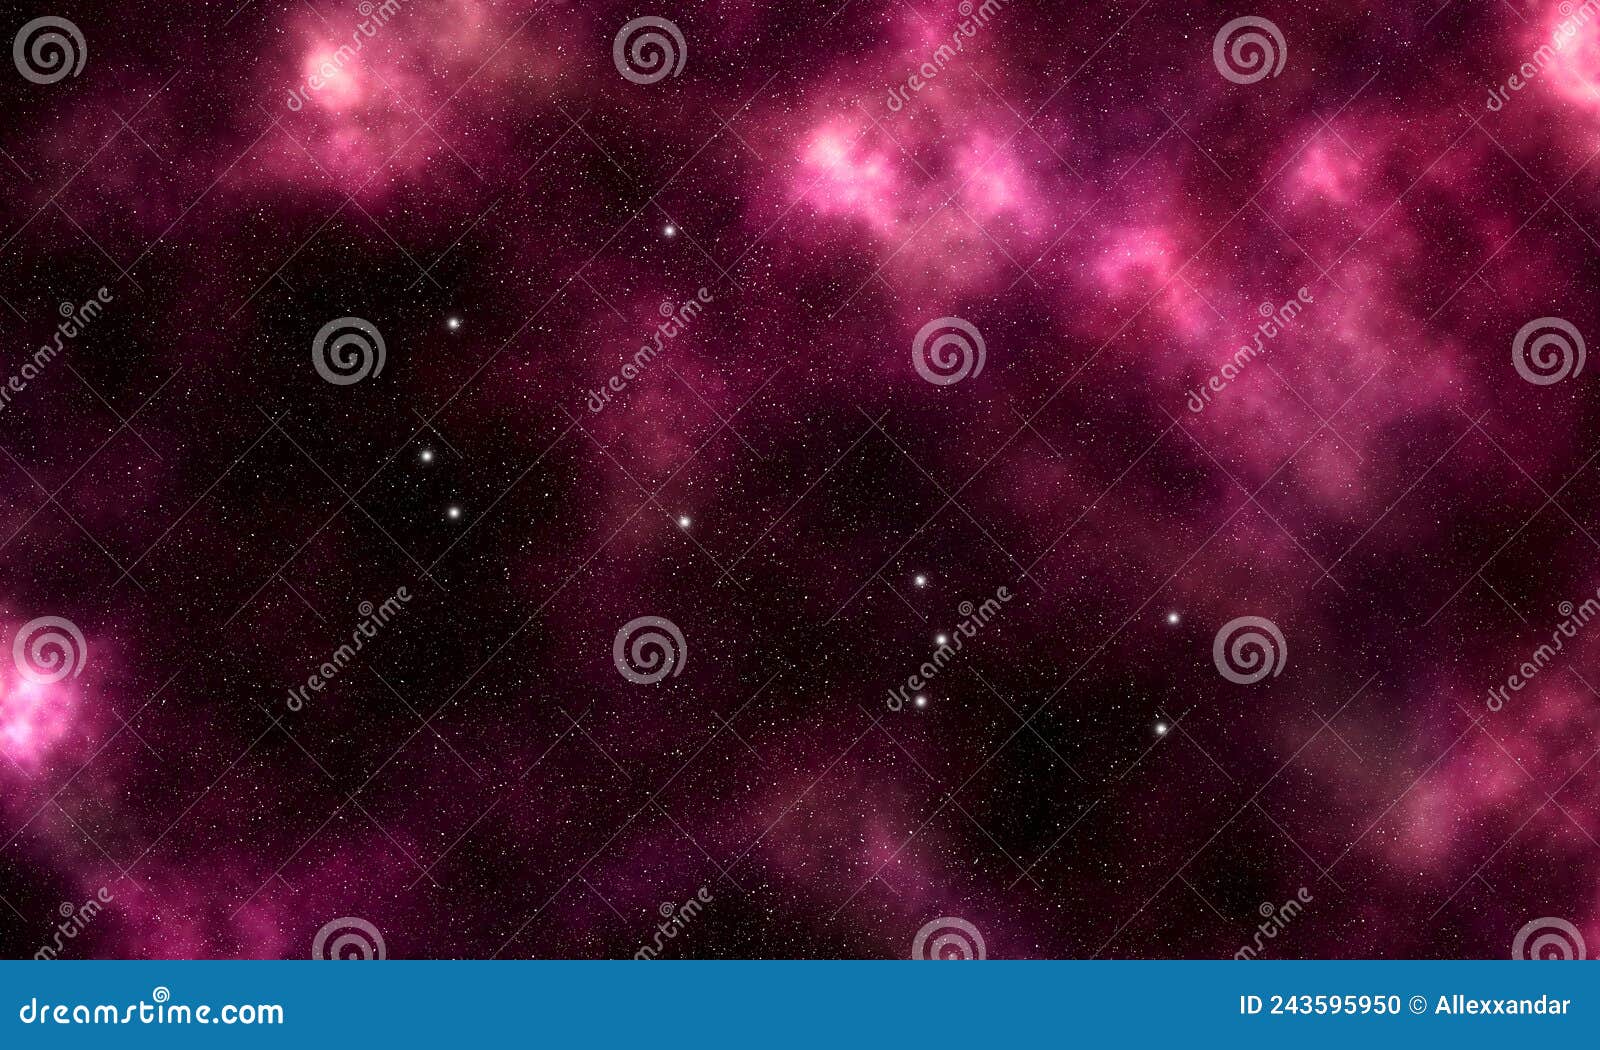 piscis austrinus star constellation, night sky, cluster of stars, deep space, southern fishÃÂ constellation